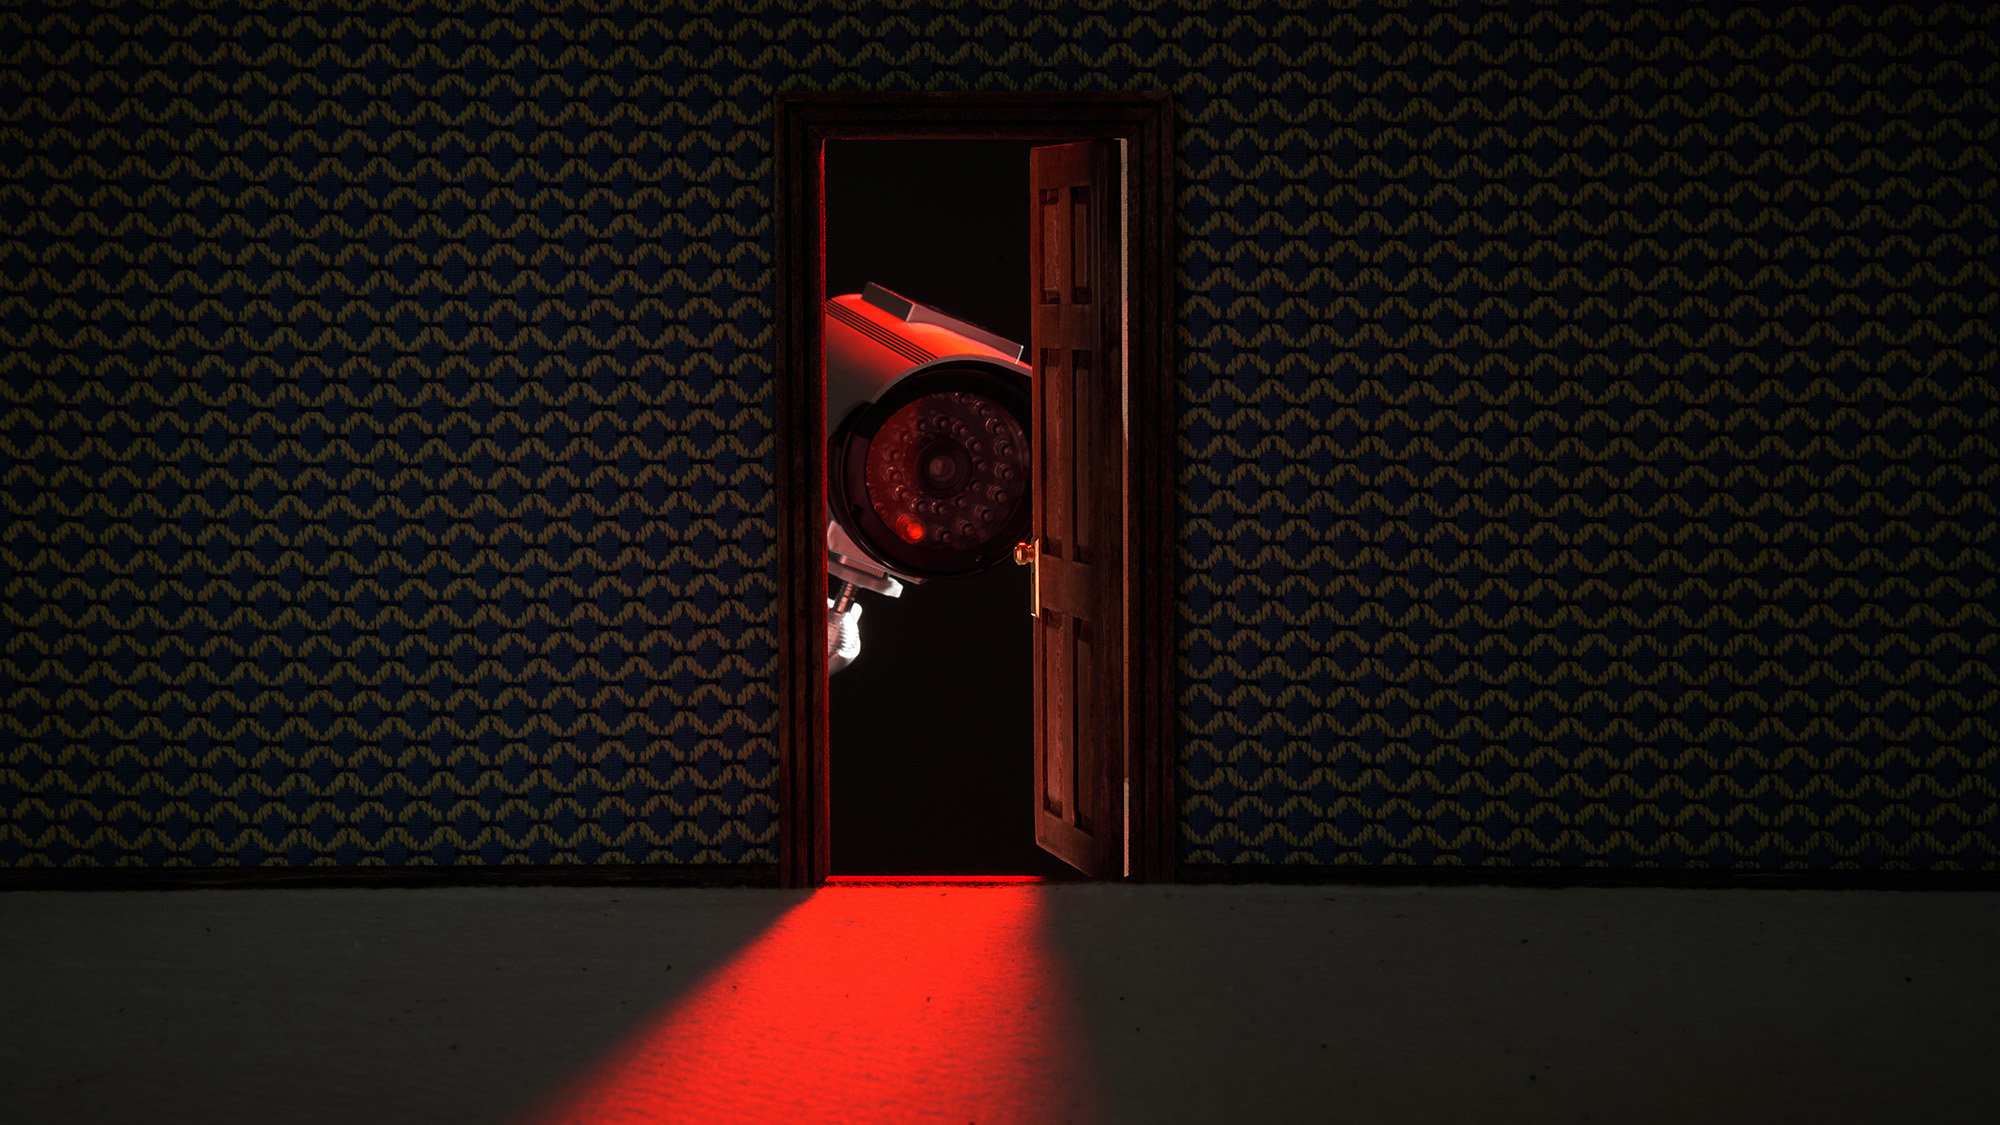 A security camera peeking through an open door.